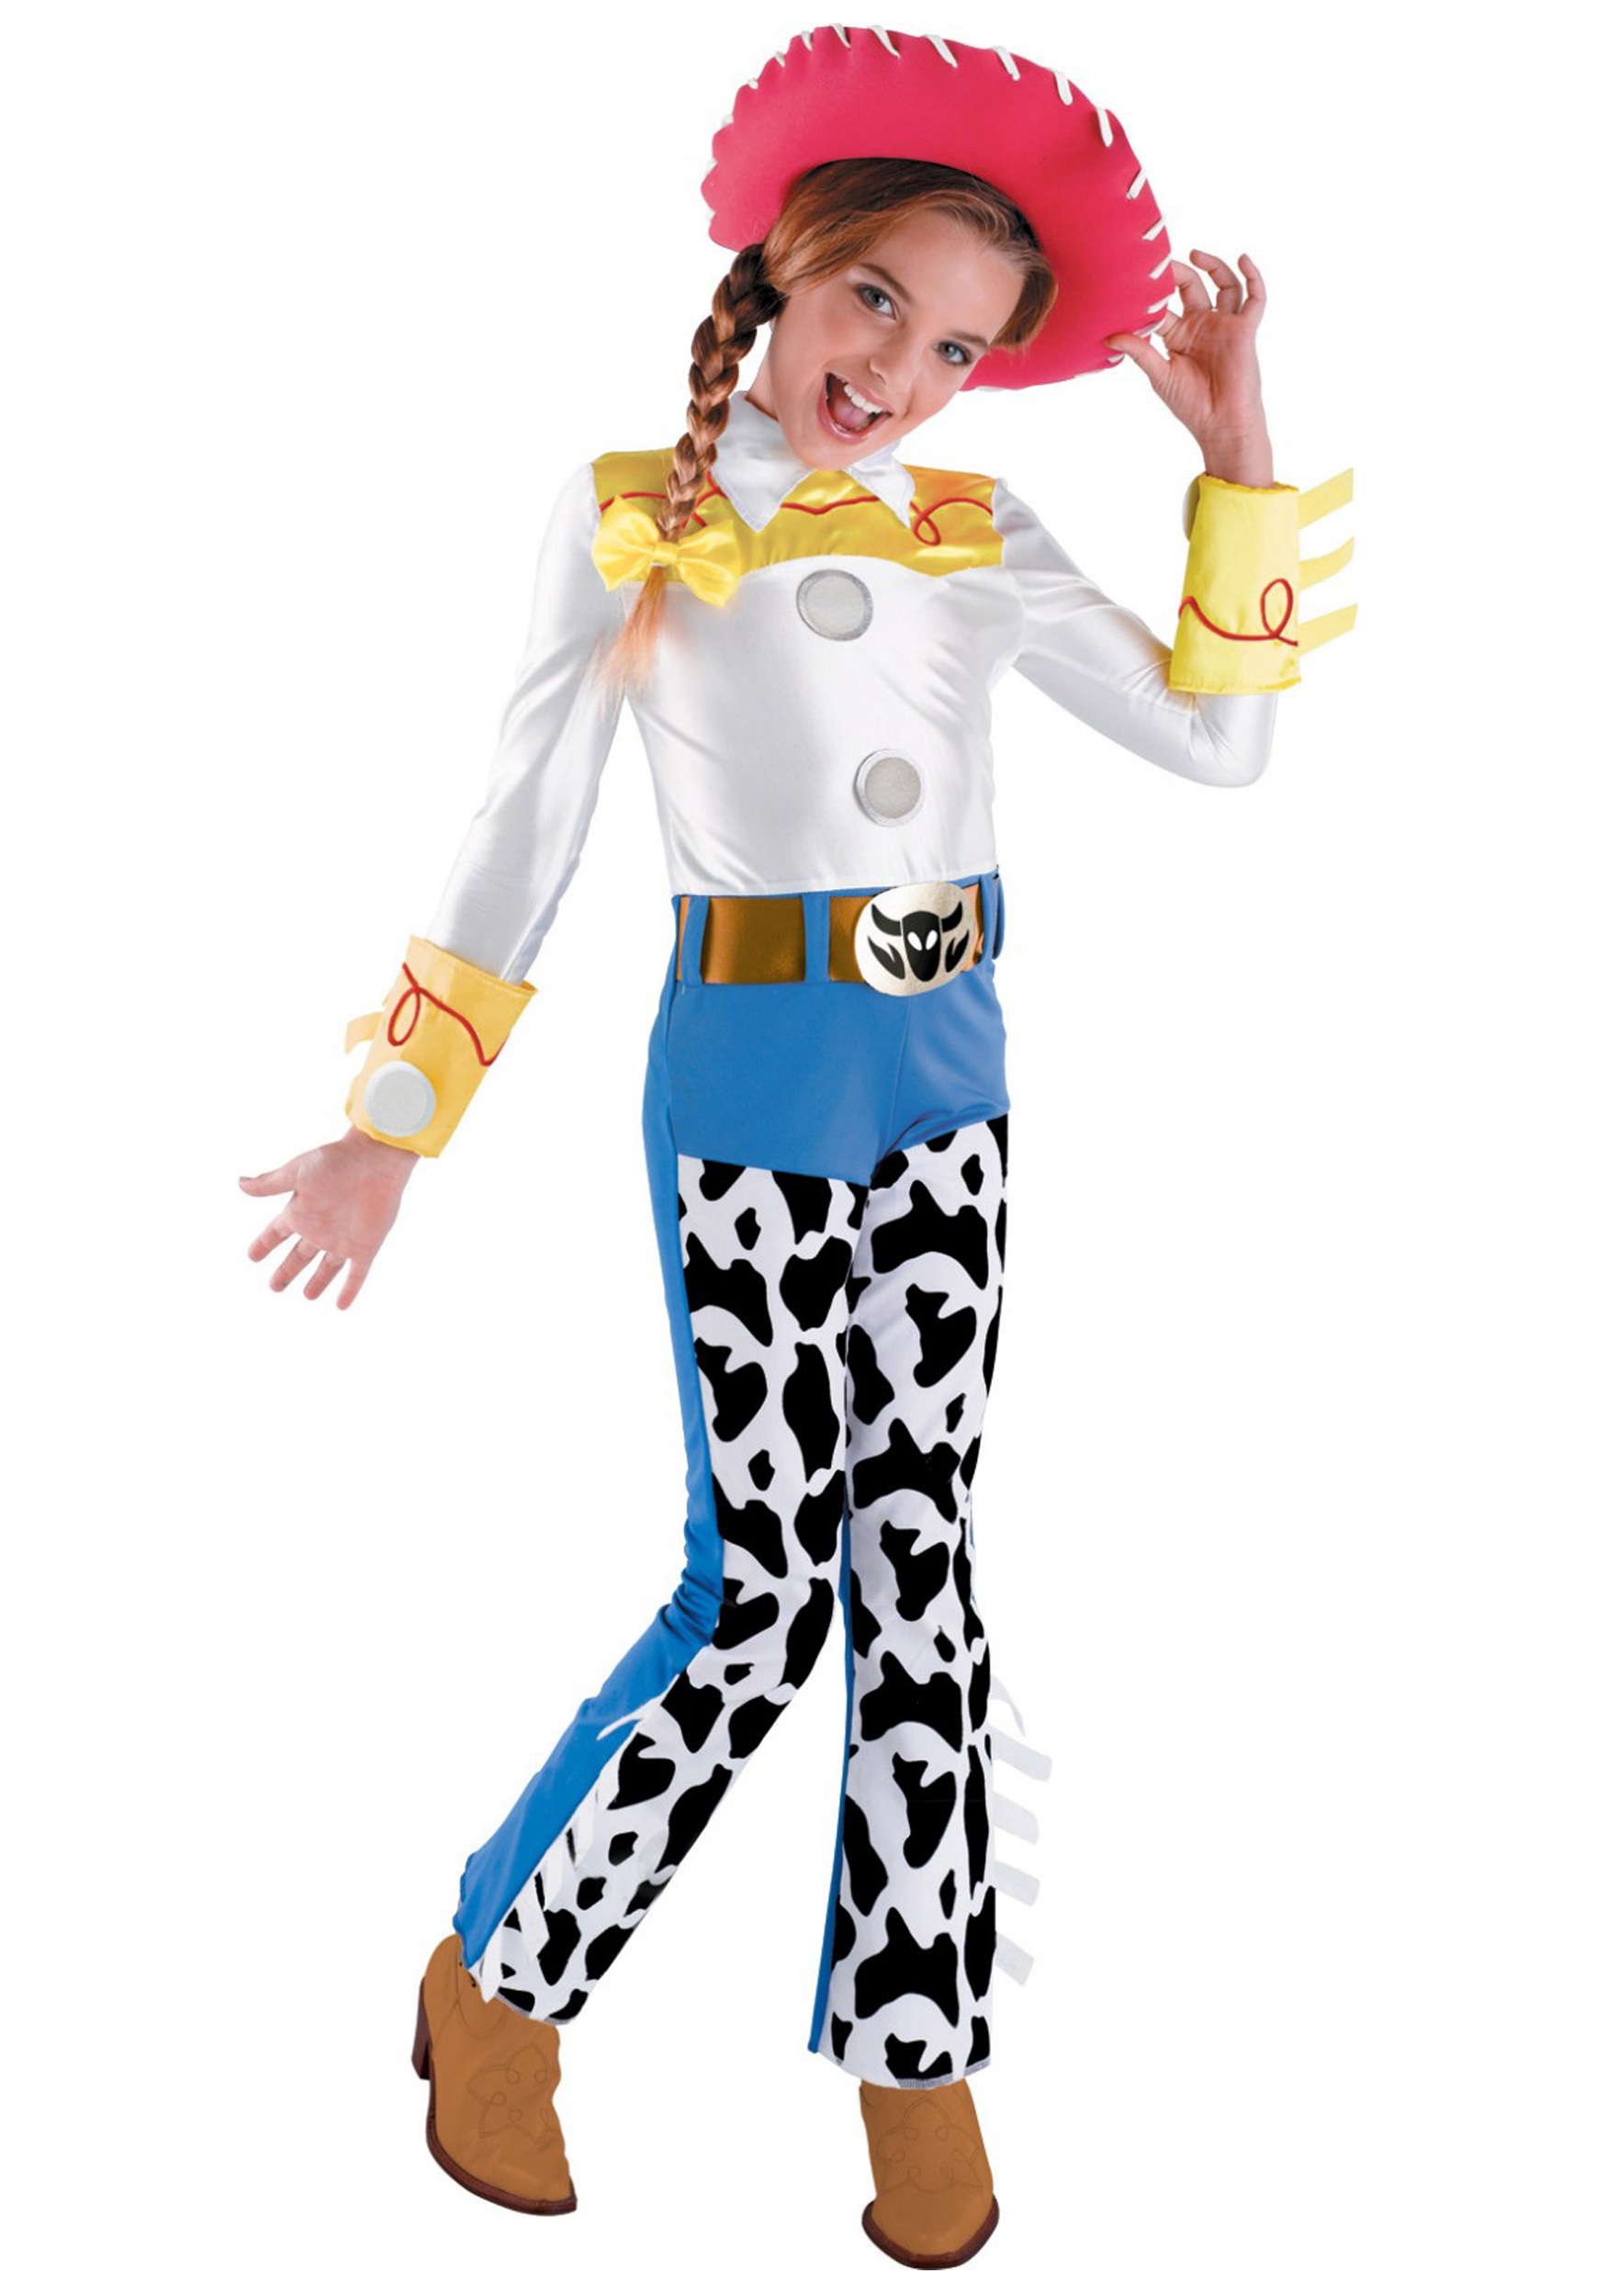 Jessie Toy Story Adult Costume 95